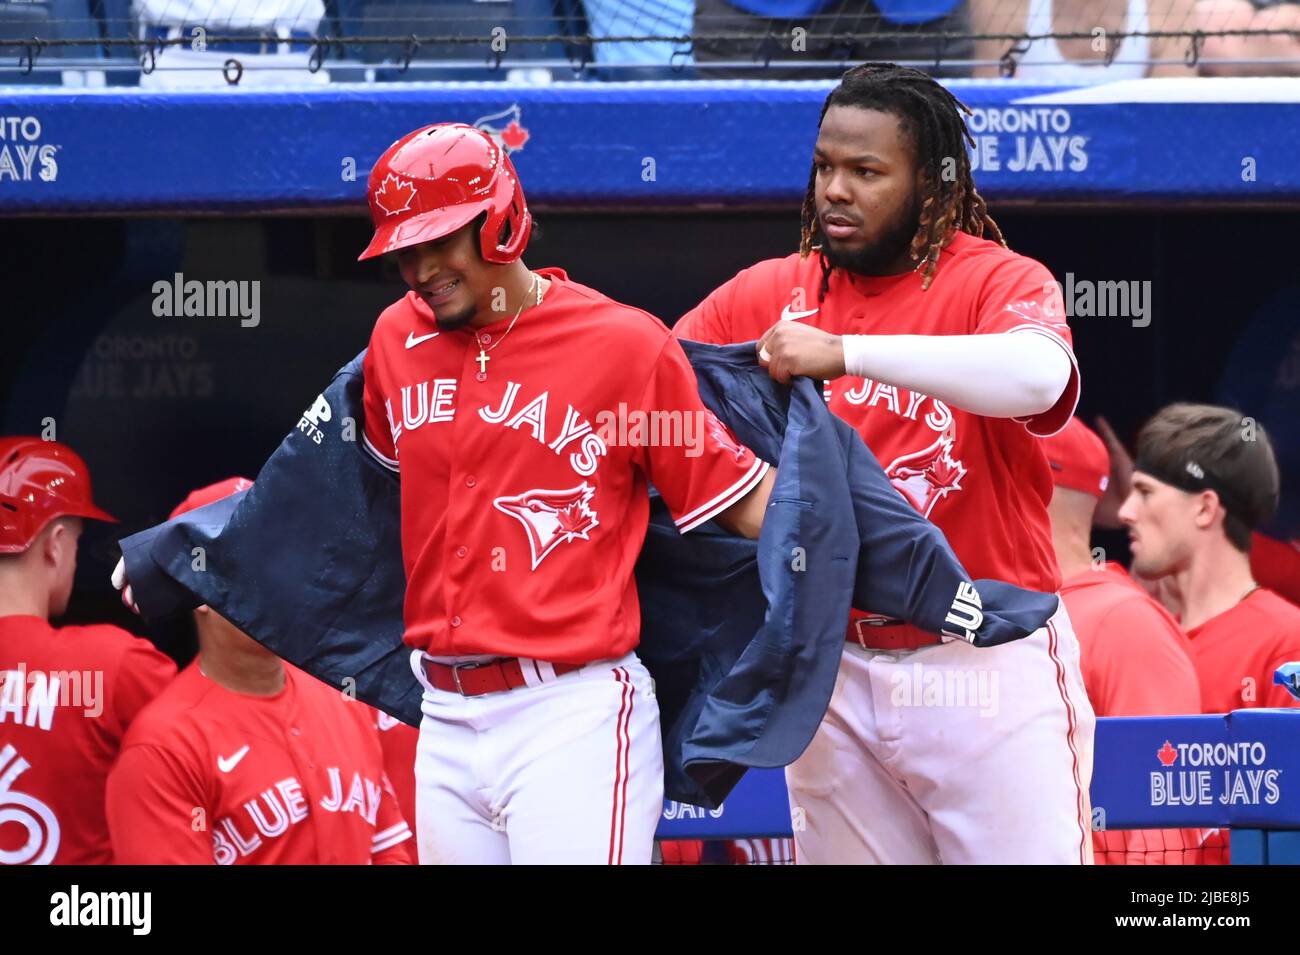 Toronto, Canada, June 5, 2022. Toronto Blue Jays' Santiago Espinal (5),  left, has ‚ÄúThe Home Run Jacket' put on him by Vladimir Guerrero Jr (27),  right, after hitting a three run home